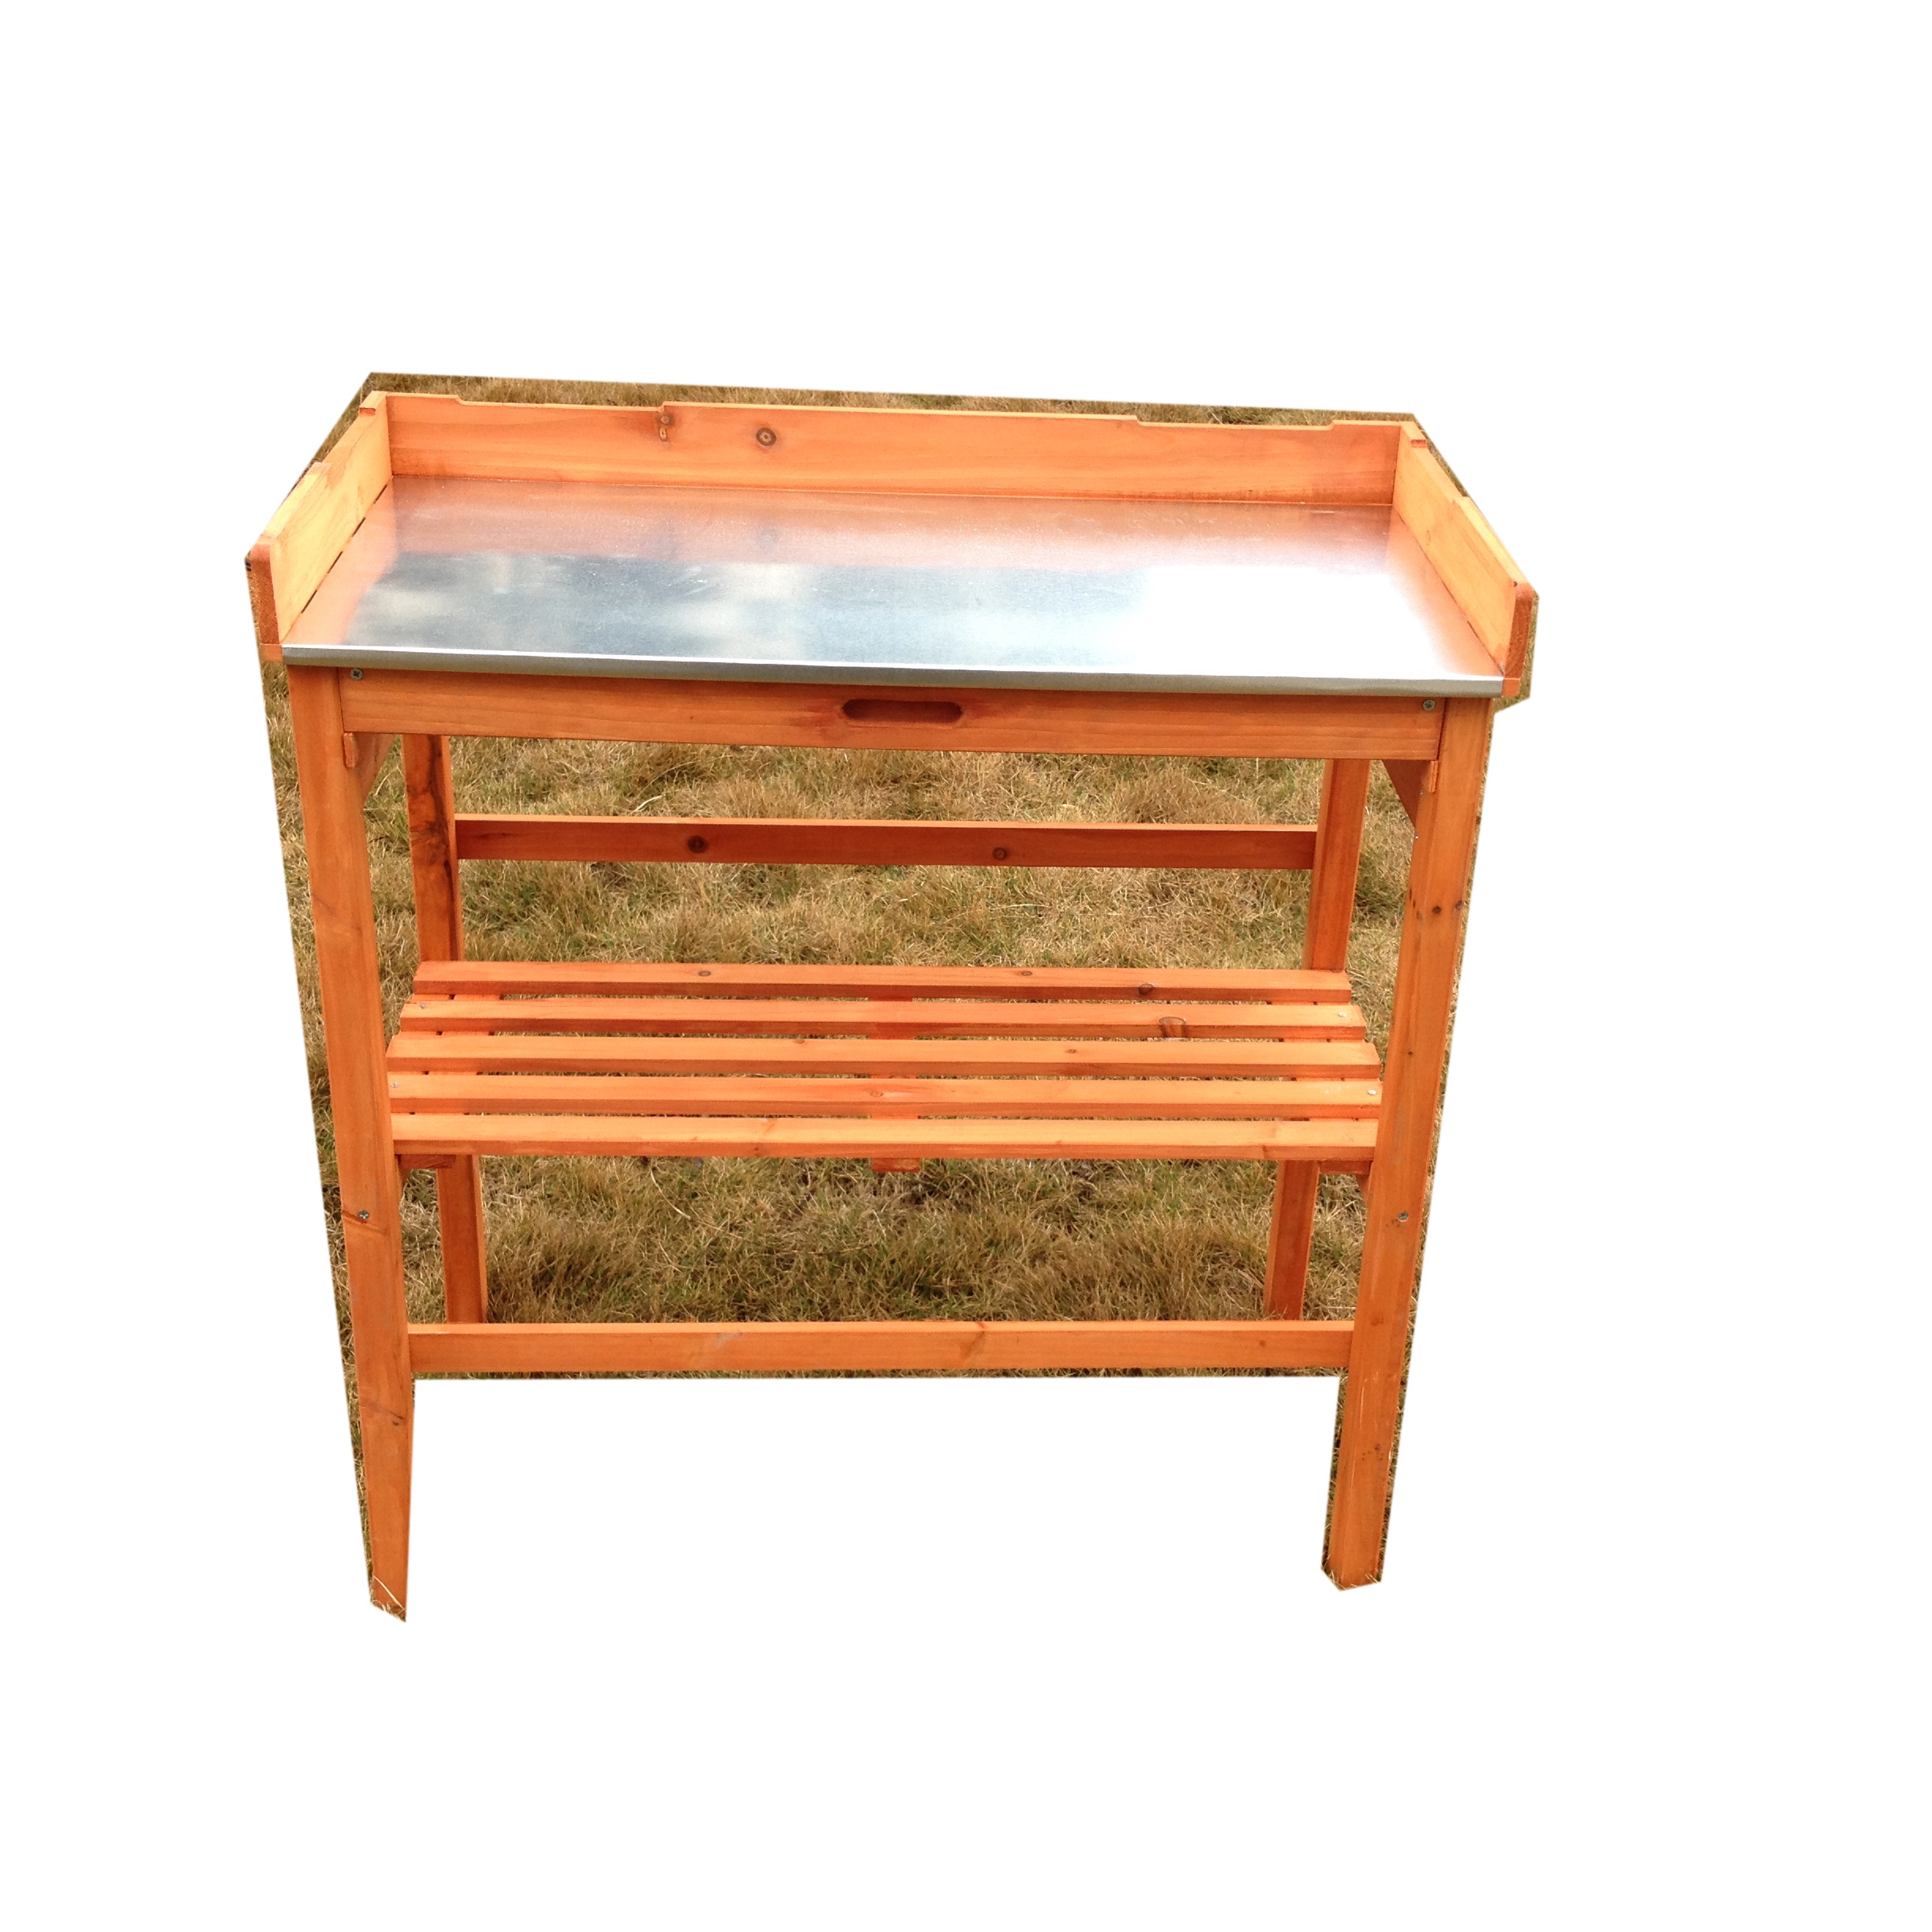 New Cheap Elegant Design Outdoor Wooden Garden Plant table shelf stand potting bench